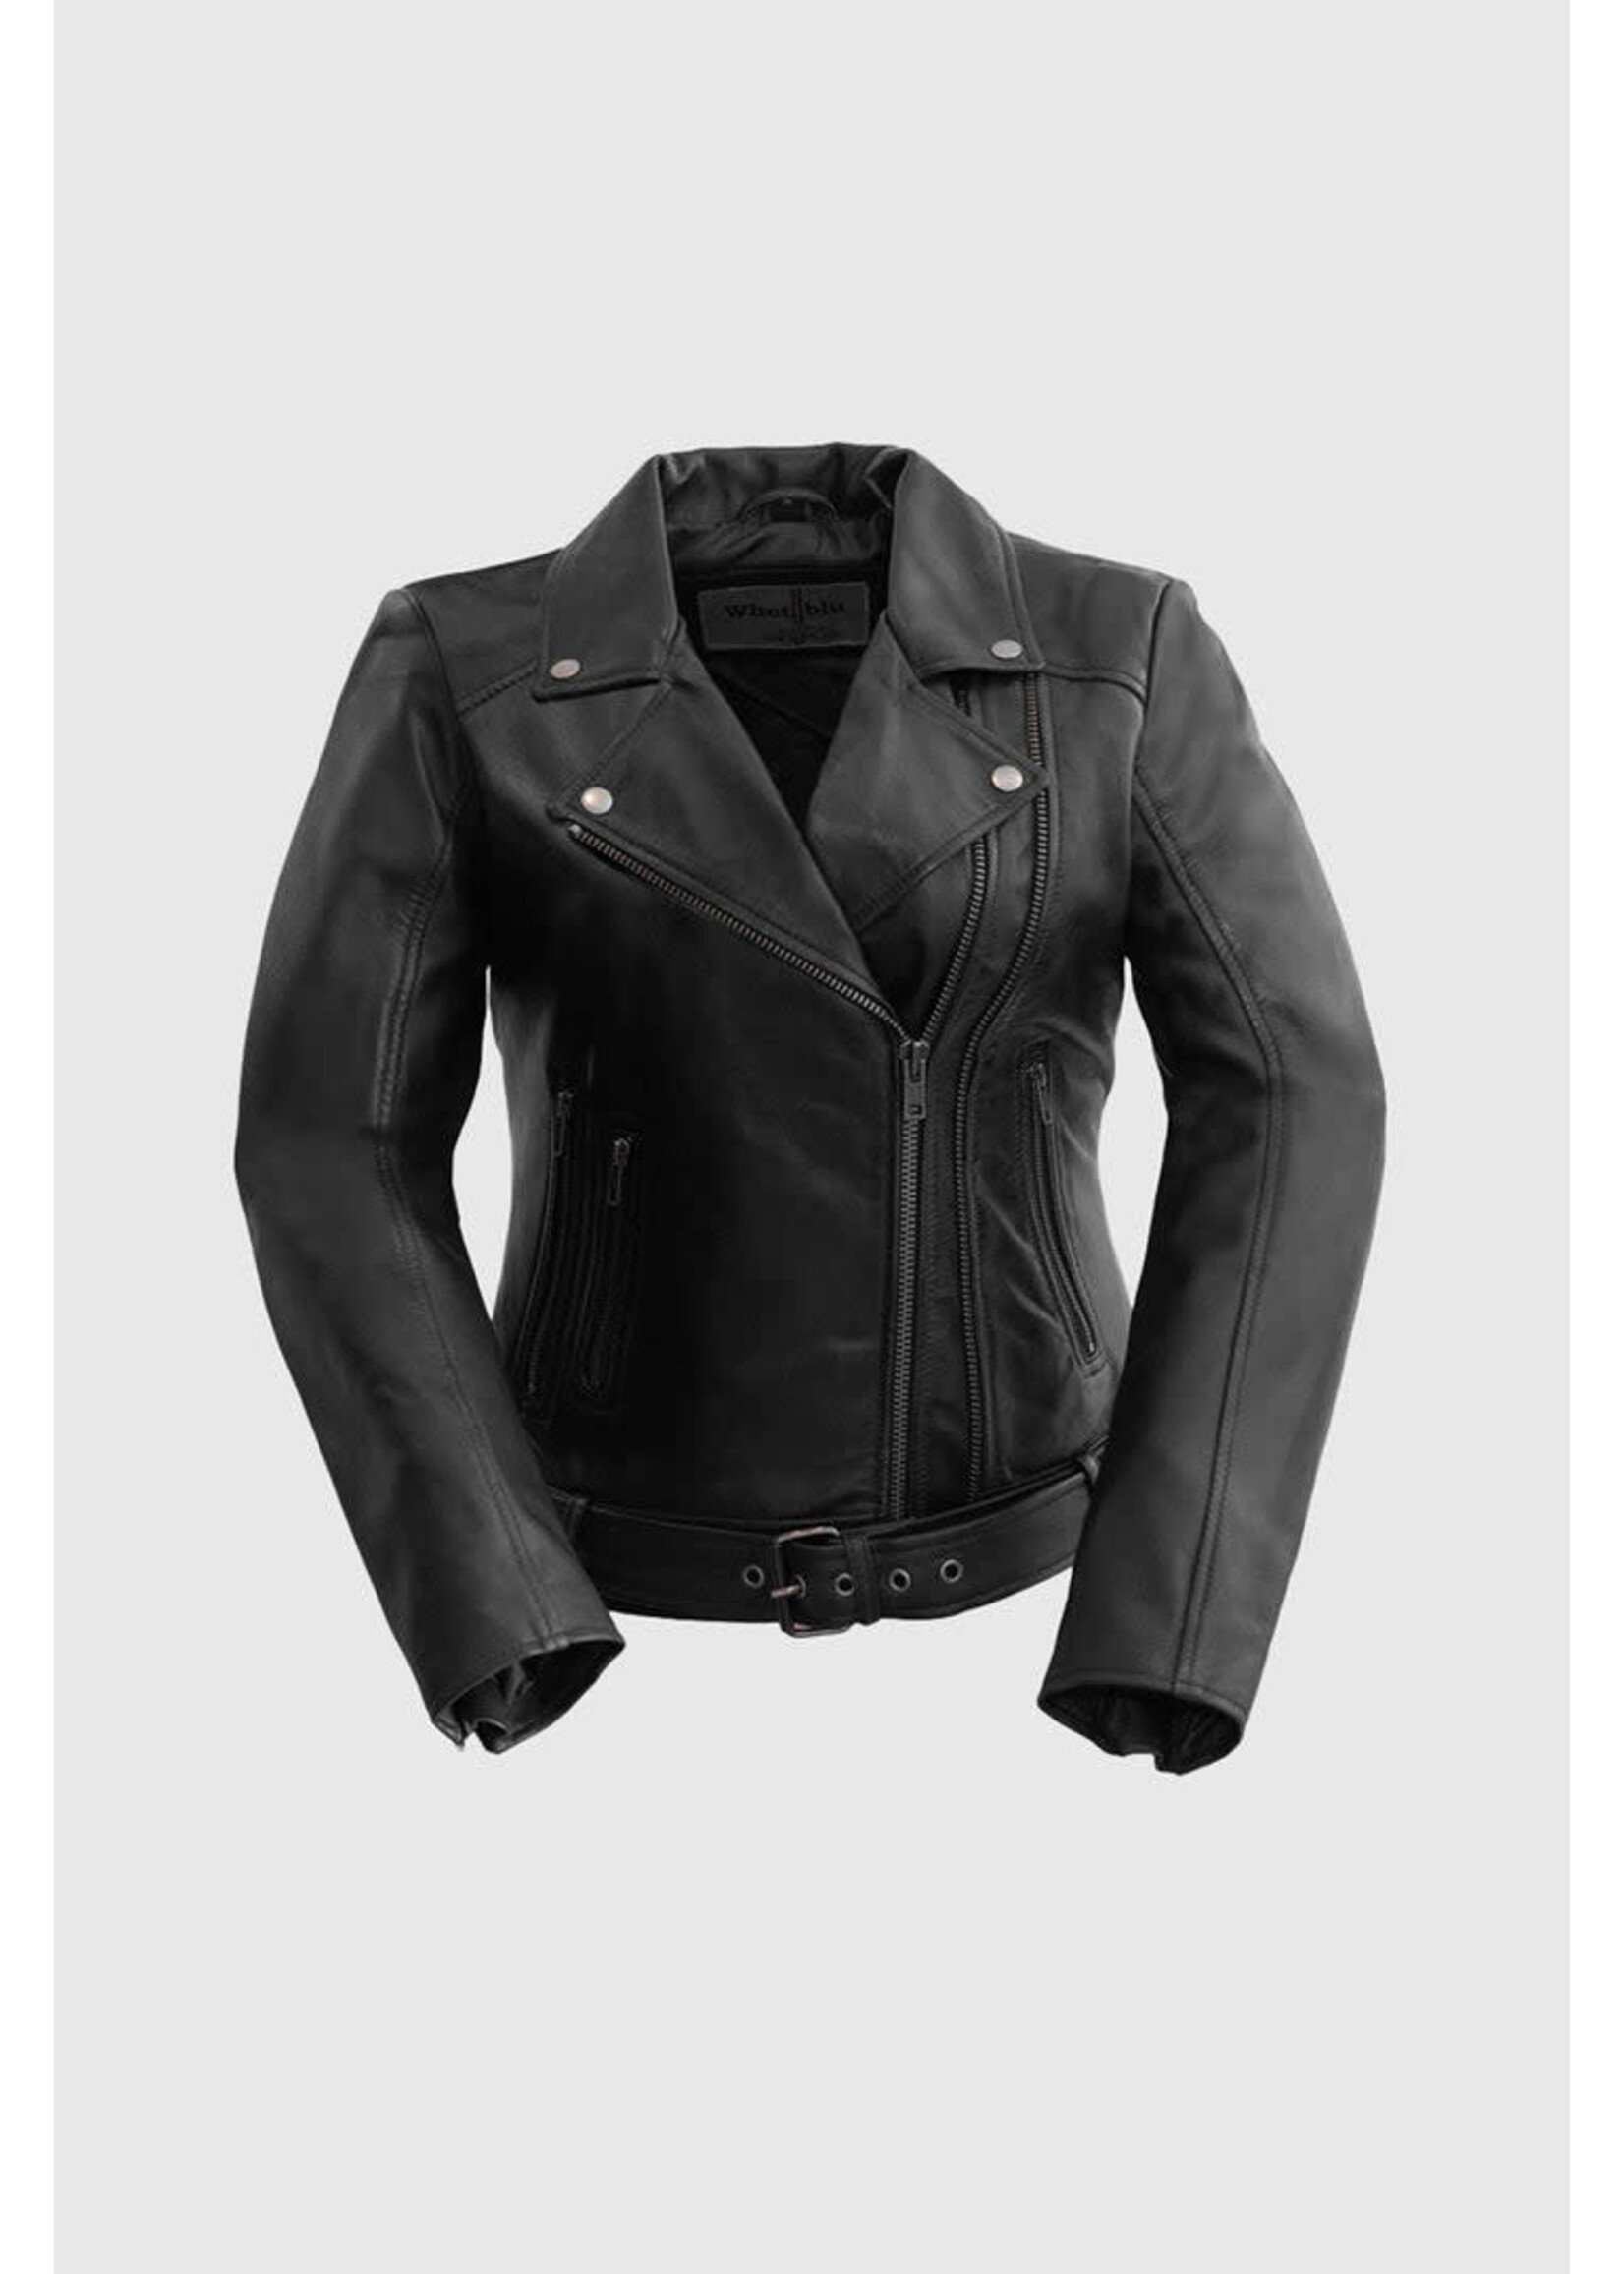 Whet Blu Chloe Womens Fashion Motorcycle Leather Jacket in Black 30% Off